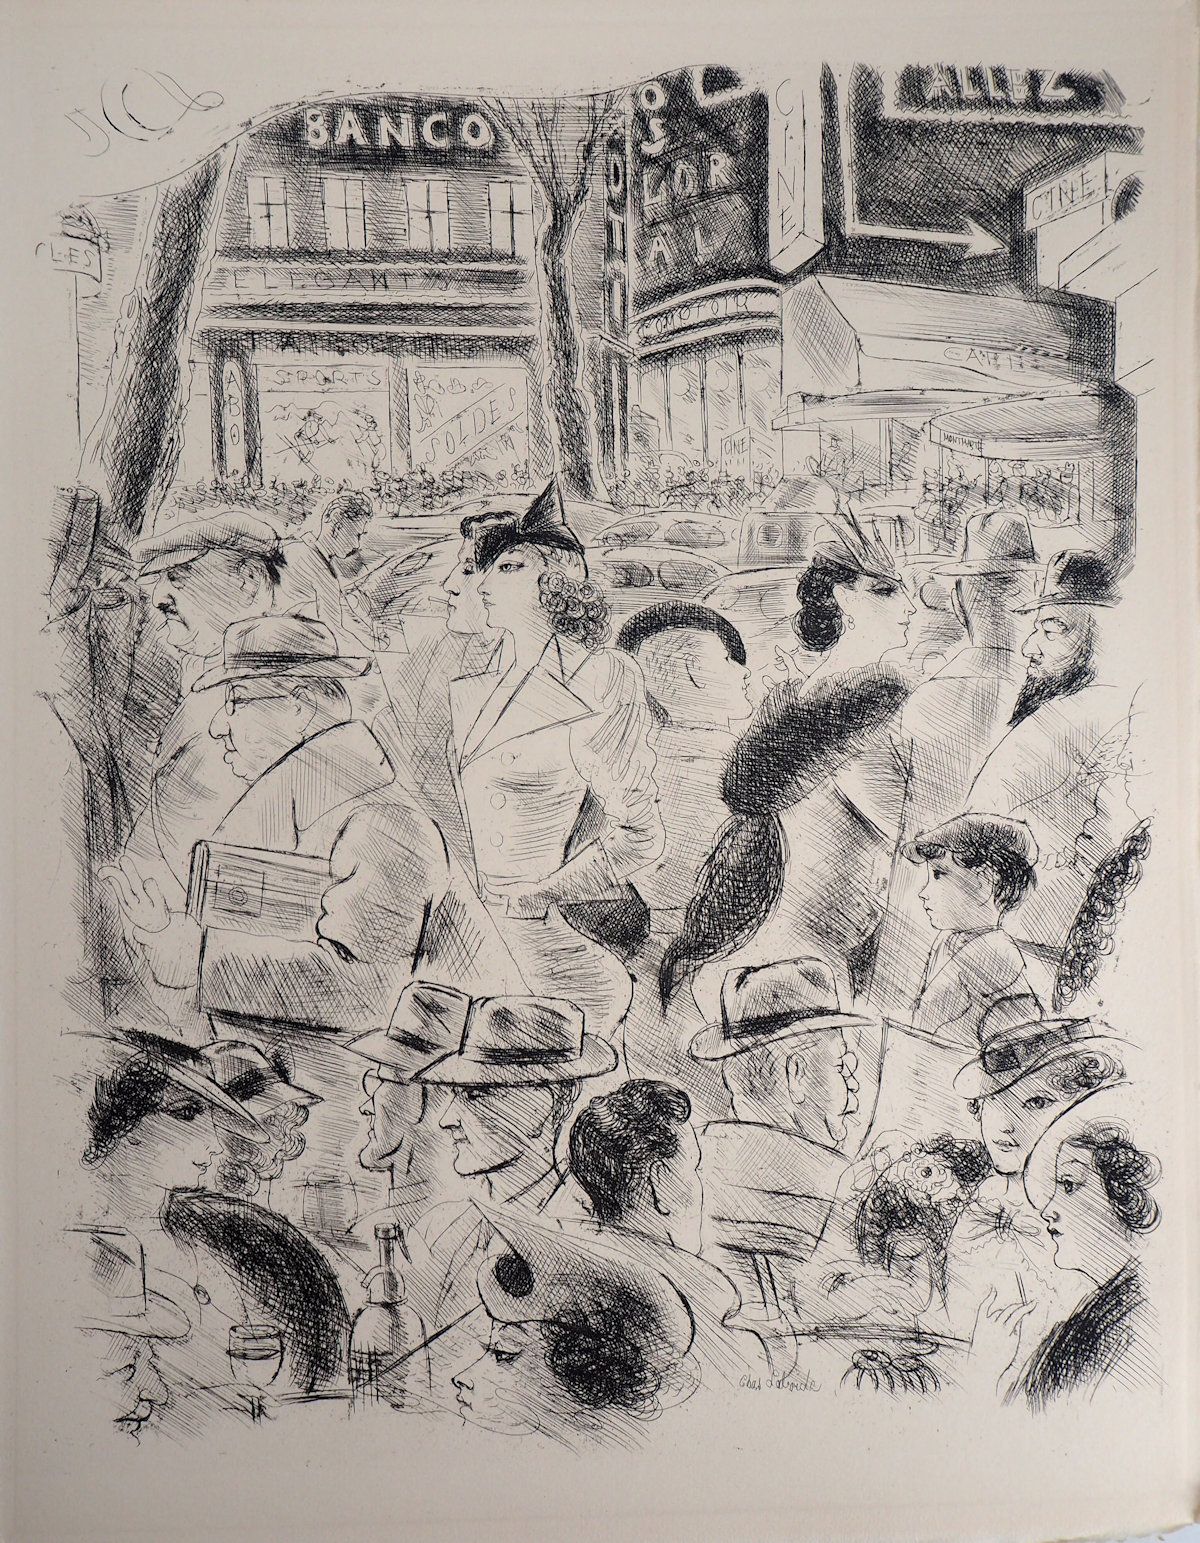 CHAS LABORDE 查斯-拉博德

大街，百货公司，1937年

原始蚀刻画

板块中的签名

牛皮纸上34.5 x 27.5厘米

信息：为 "巴黎的荣&hellip;